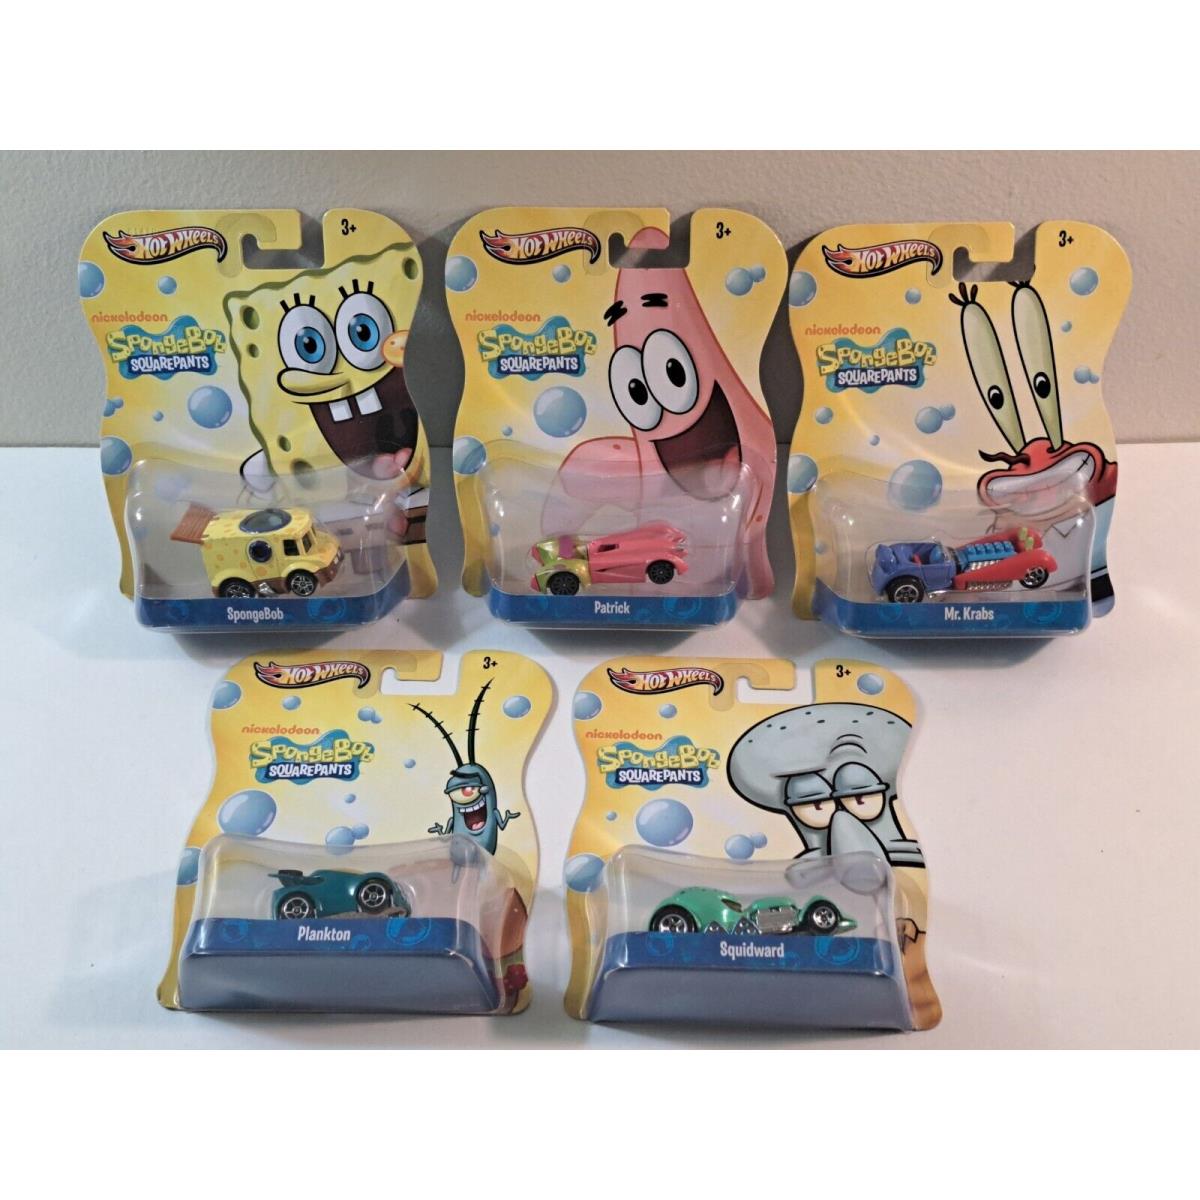 2012 Hot Wheels Spongebob Squarepants Character Cars Complete Set OF 5